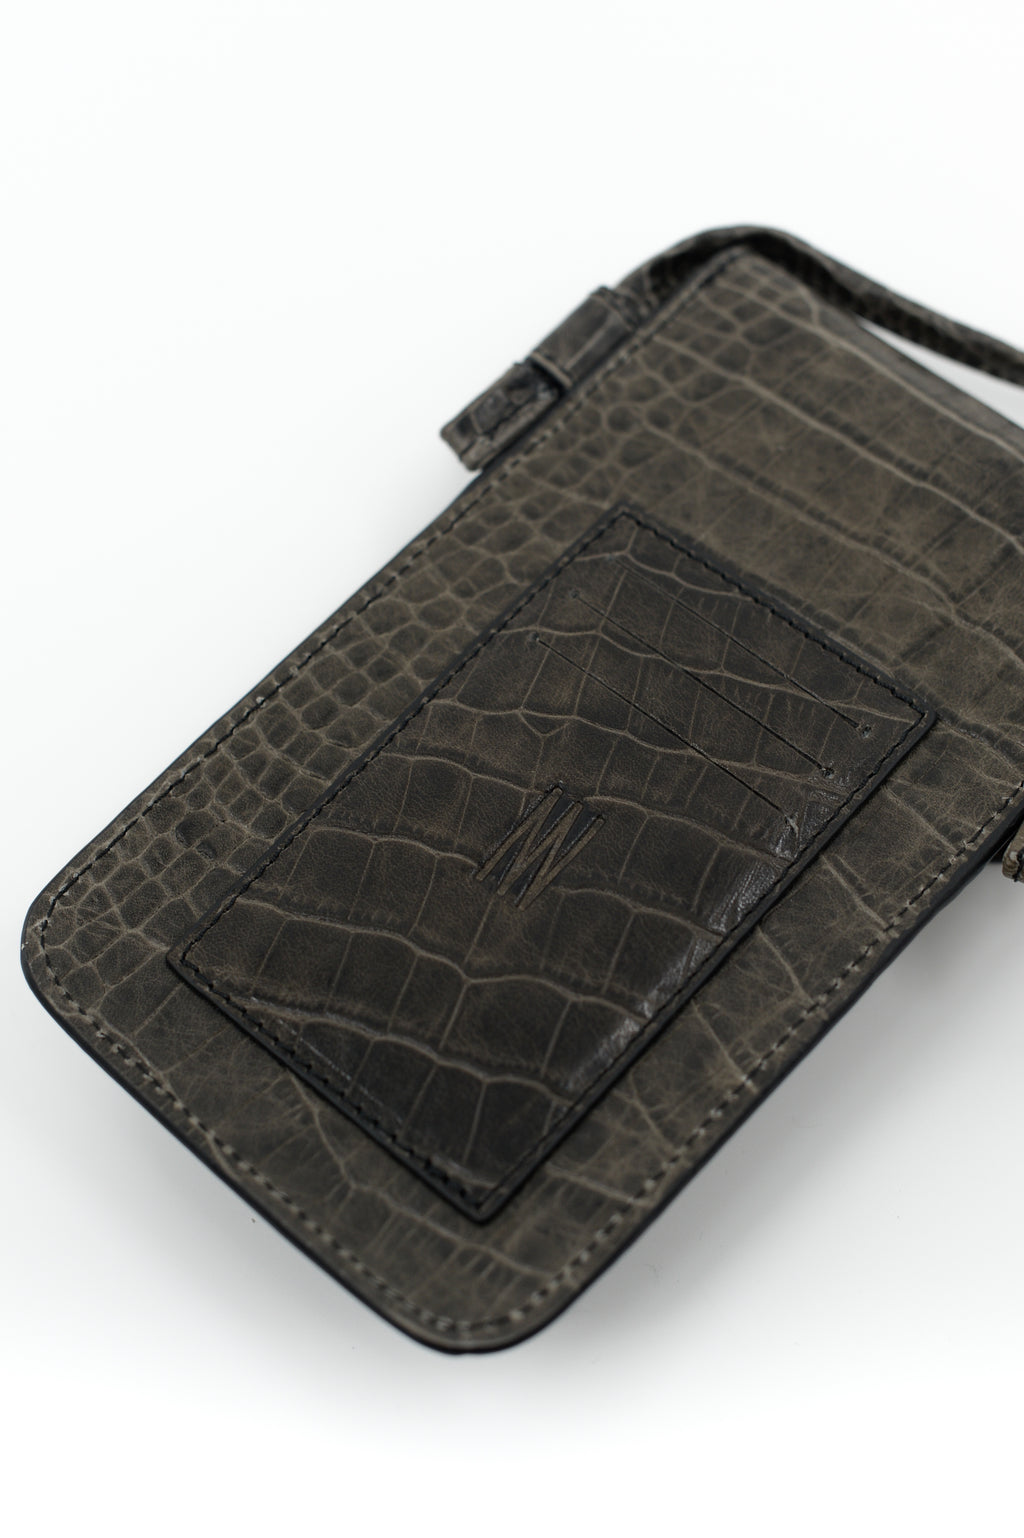 Smartphone bag in croco black olive